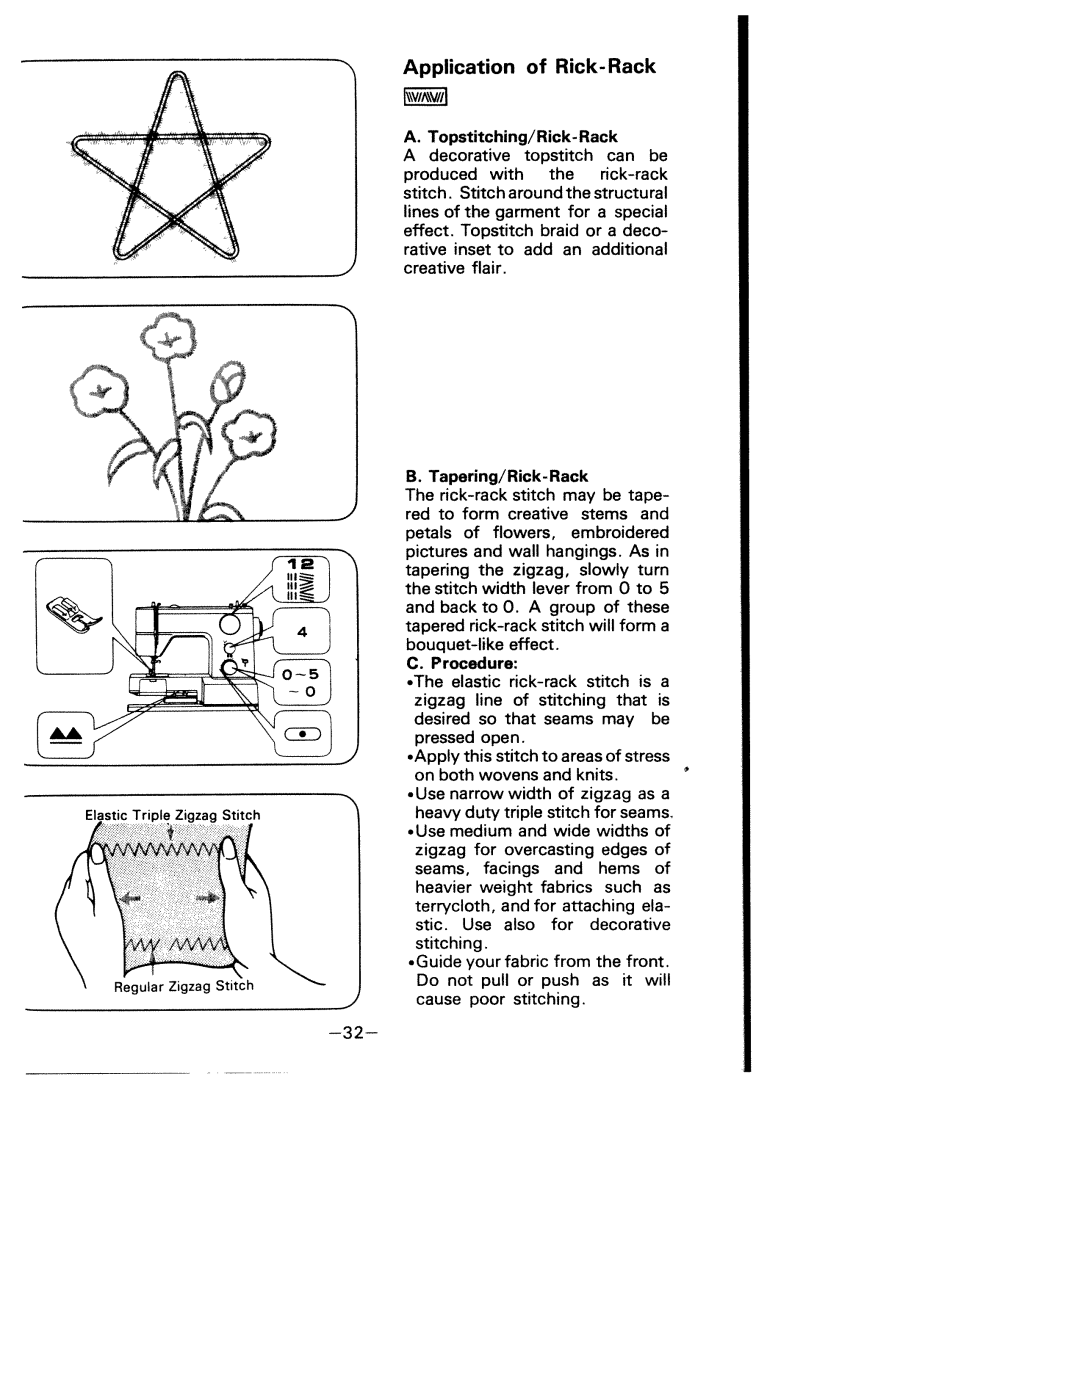 White 1927 manual Application of, Rick-Rack, tape, I\wt’iI 